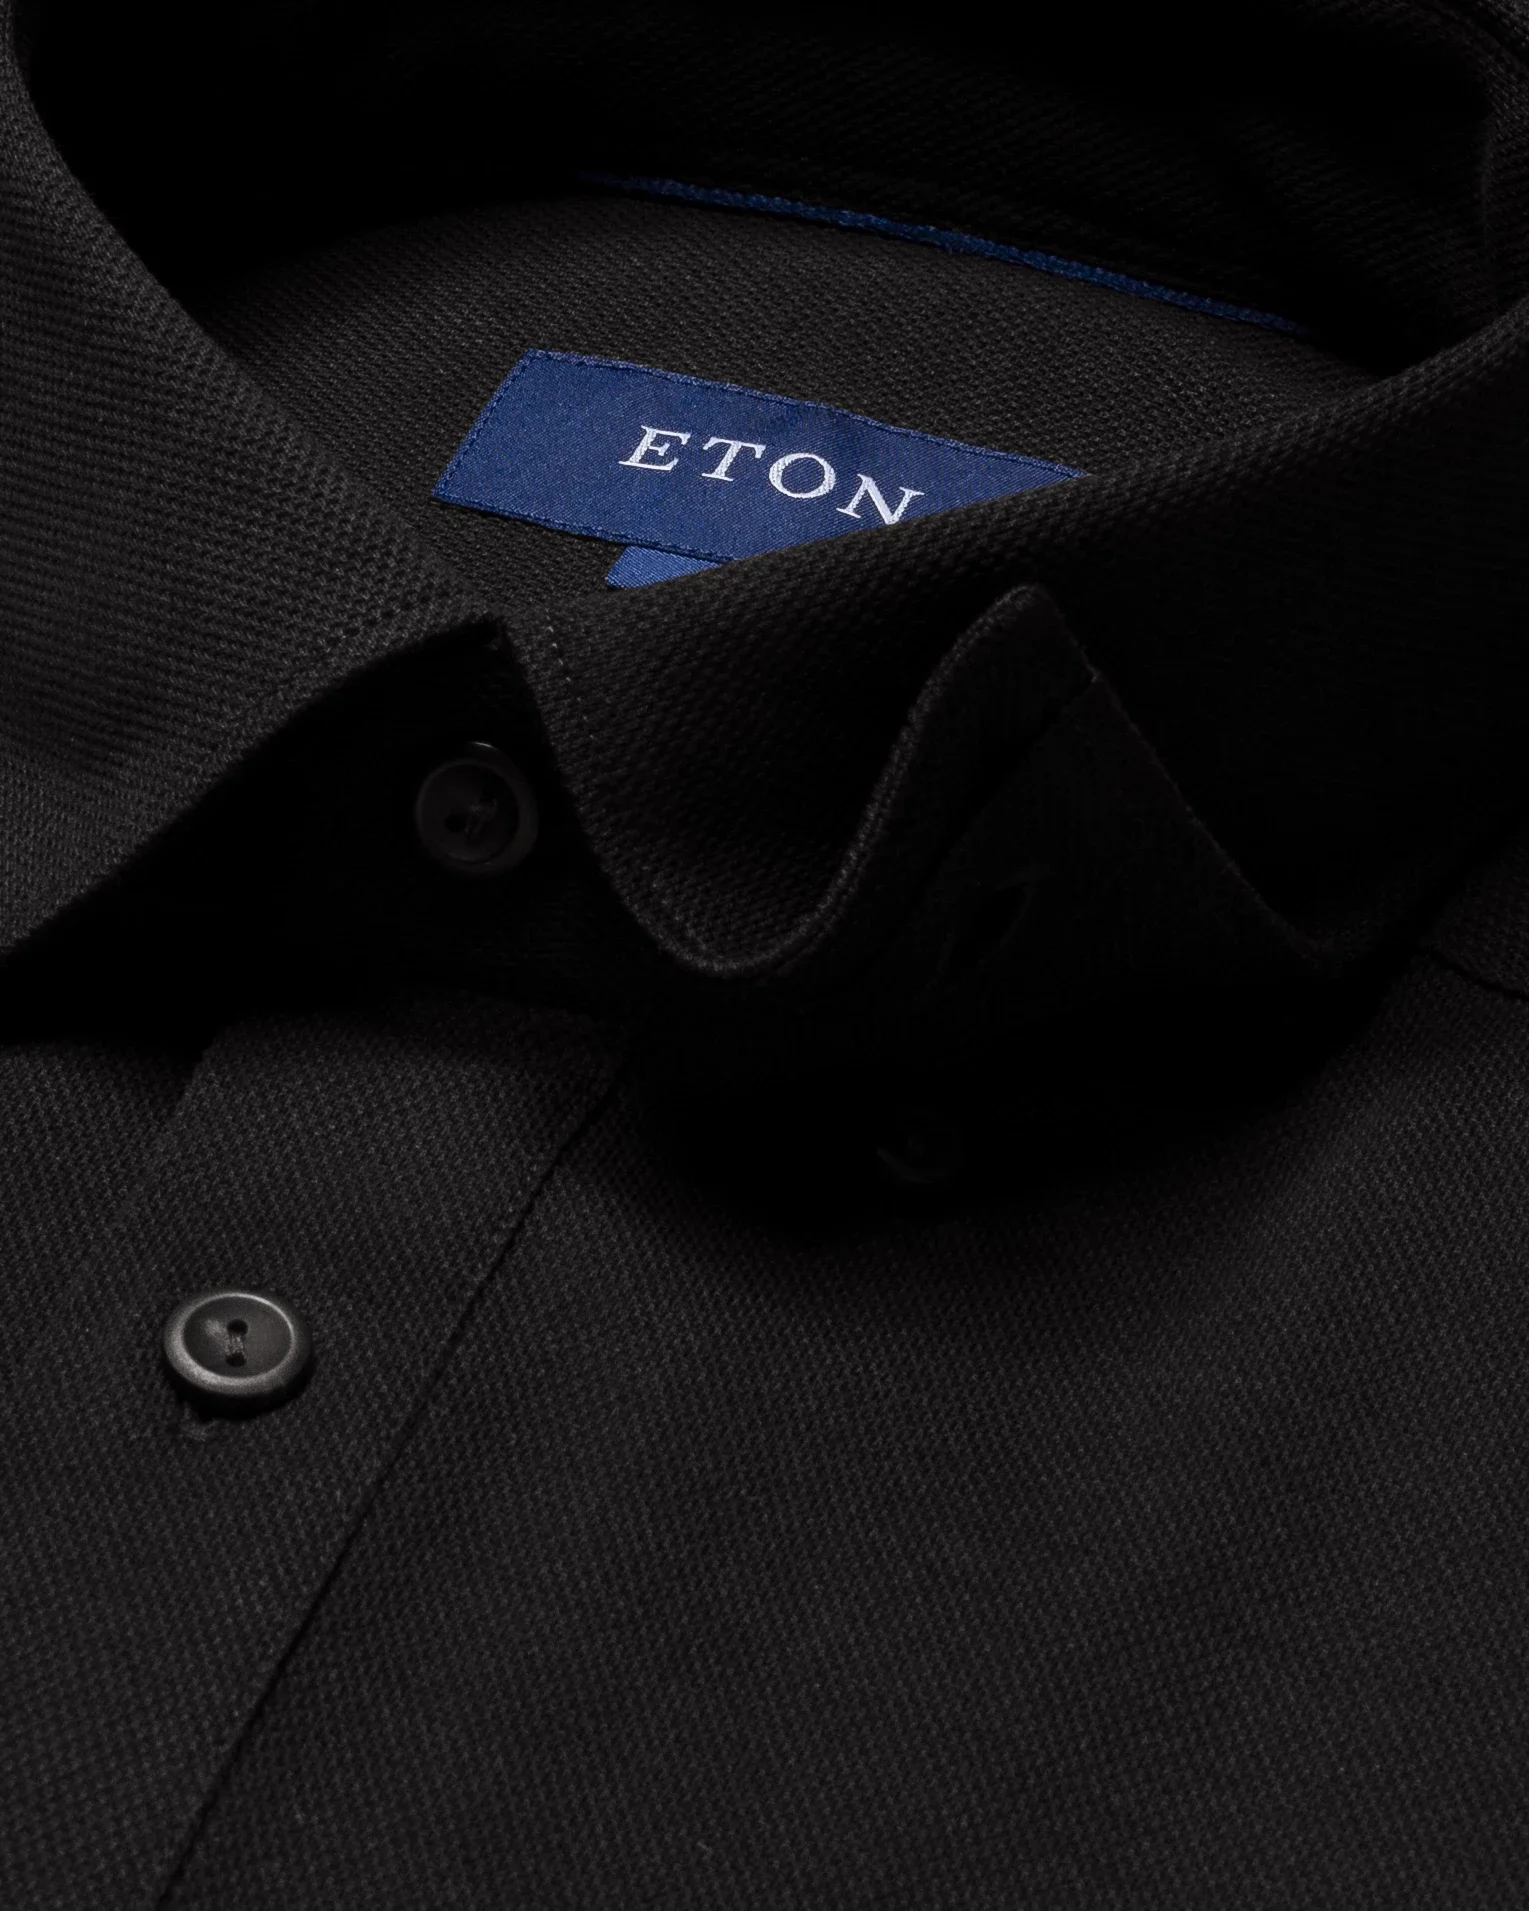 Eton - black polo shirt long sleeved